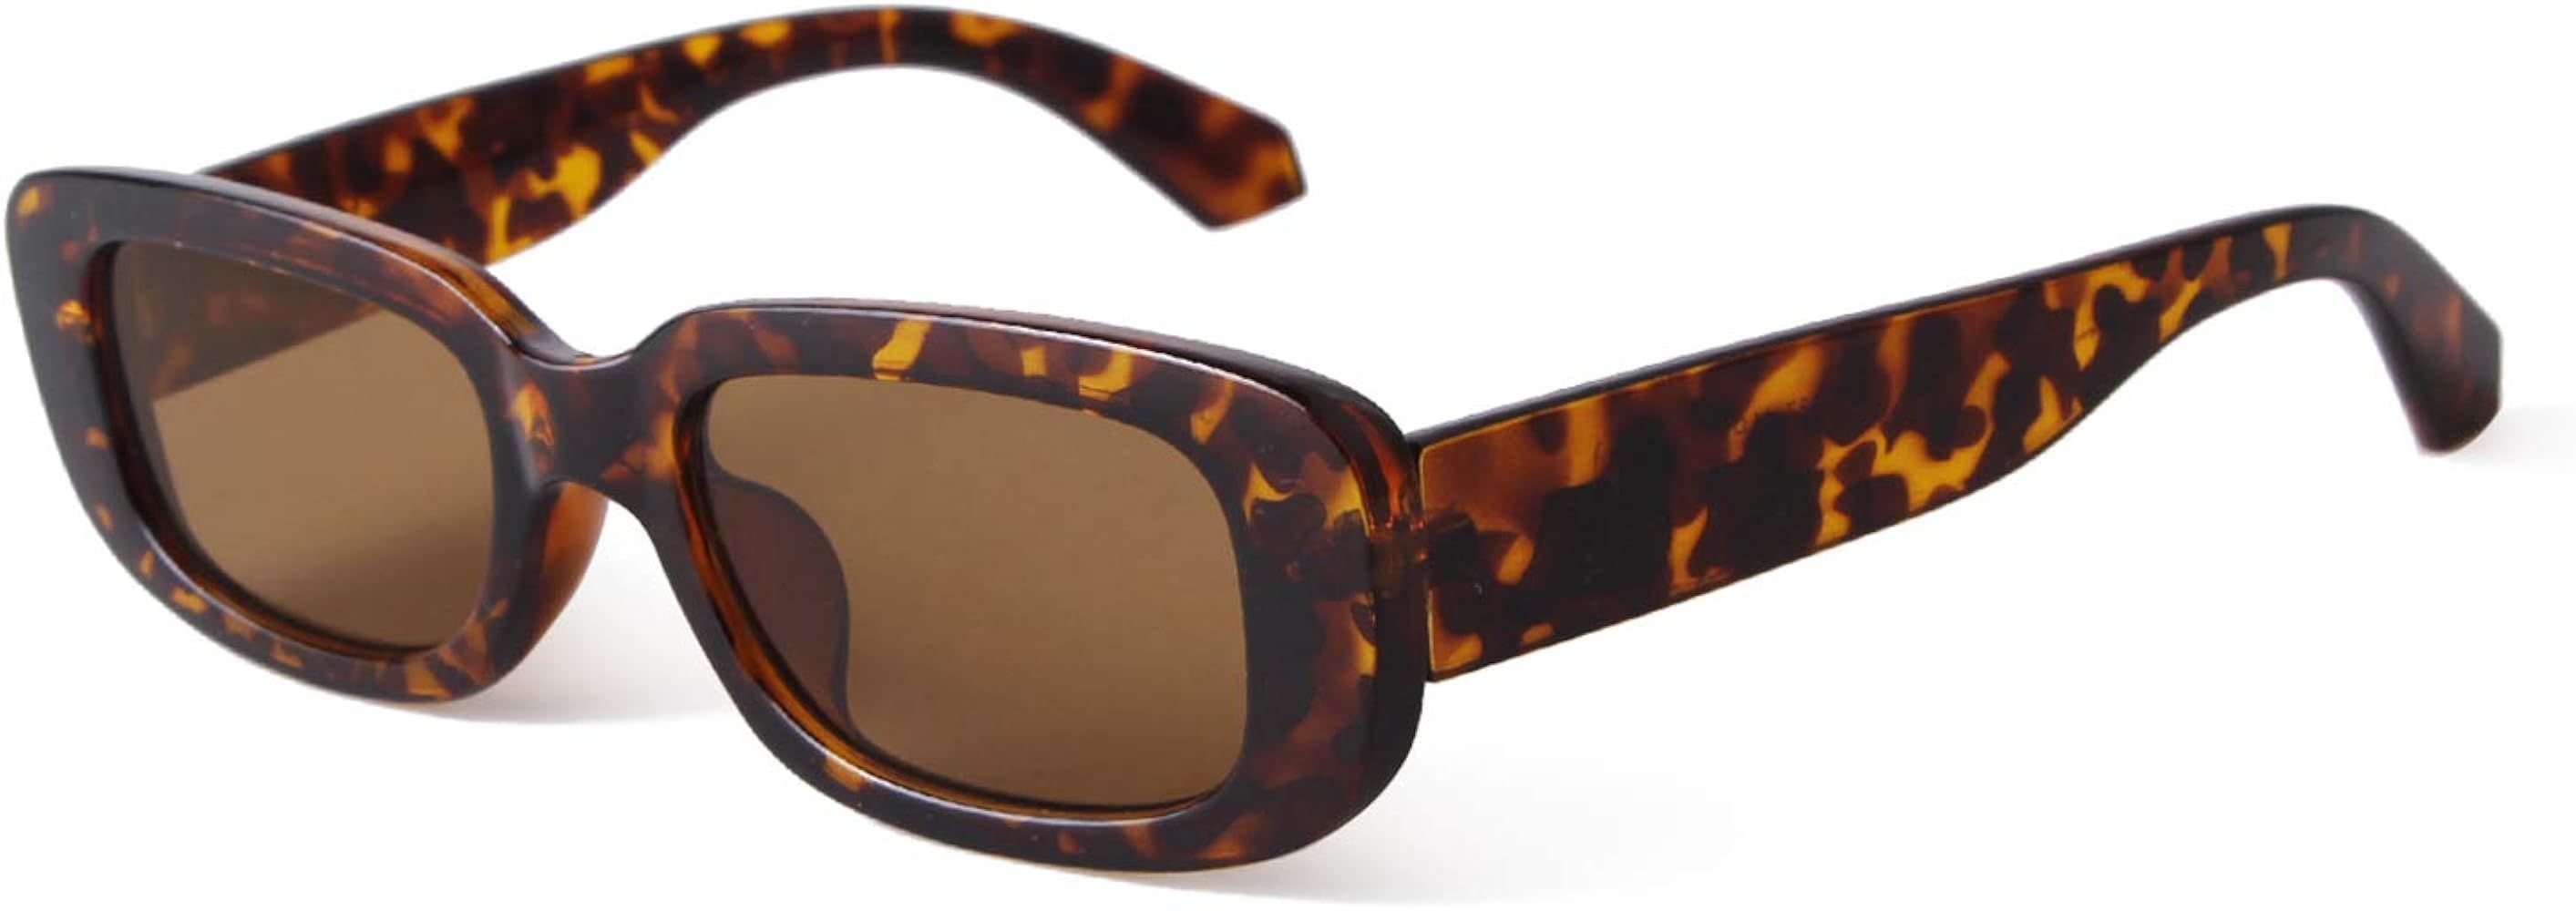 Rectangle Sunglasses Women Vintage Retro Glasses Wide Black Tortoise Frame | Amazon (US)